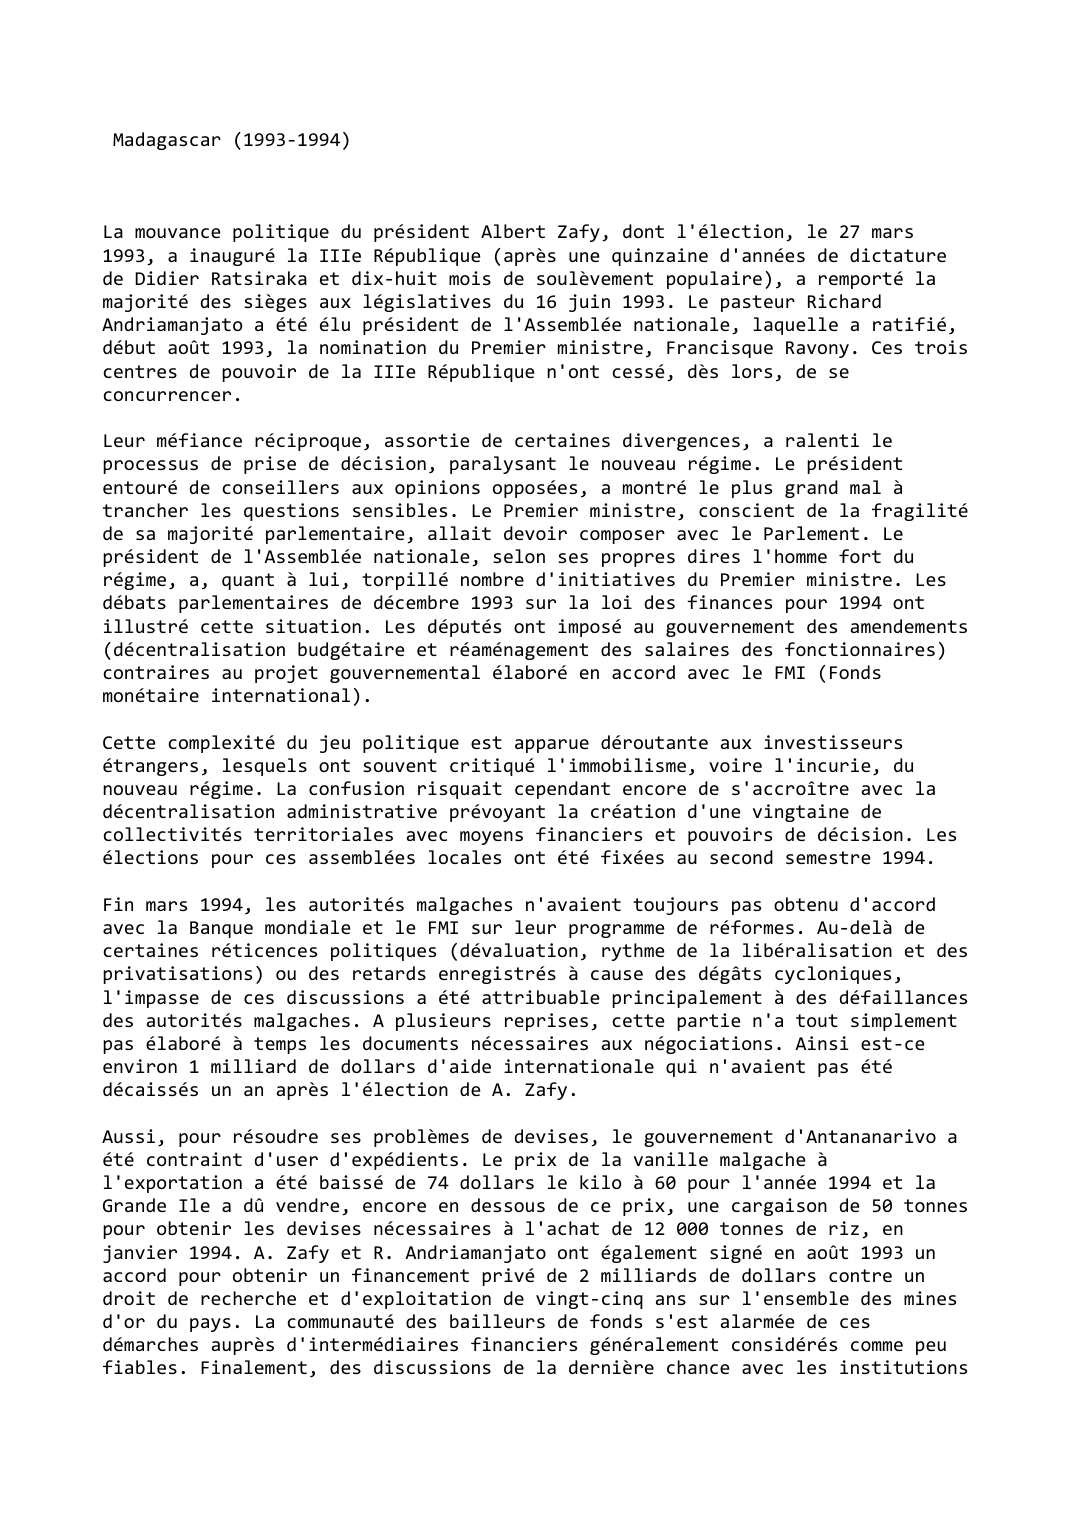 Prévisualisation du document Madagascar (1993-1994)